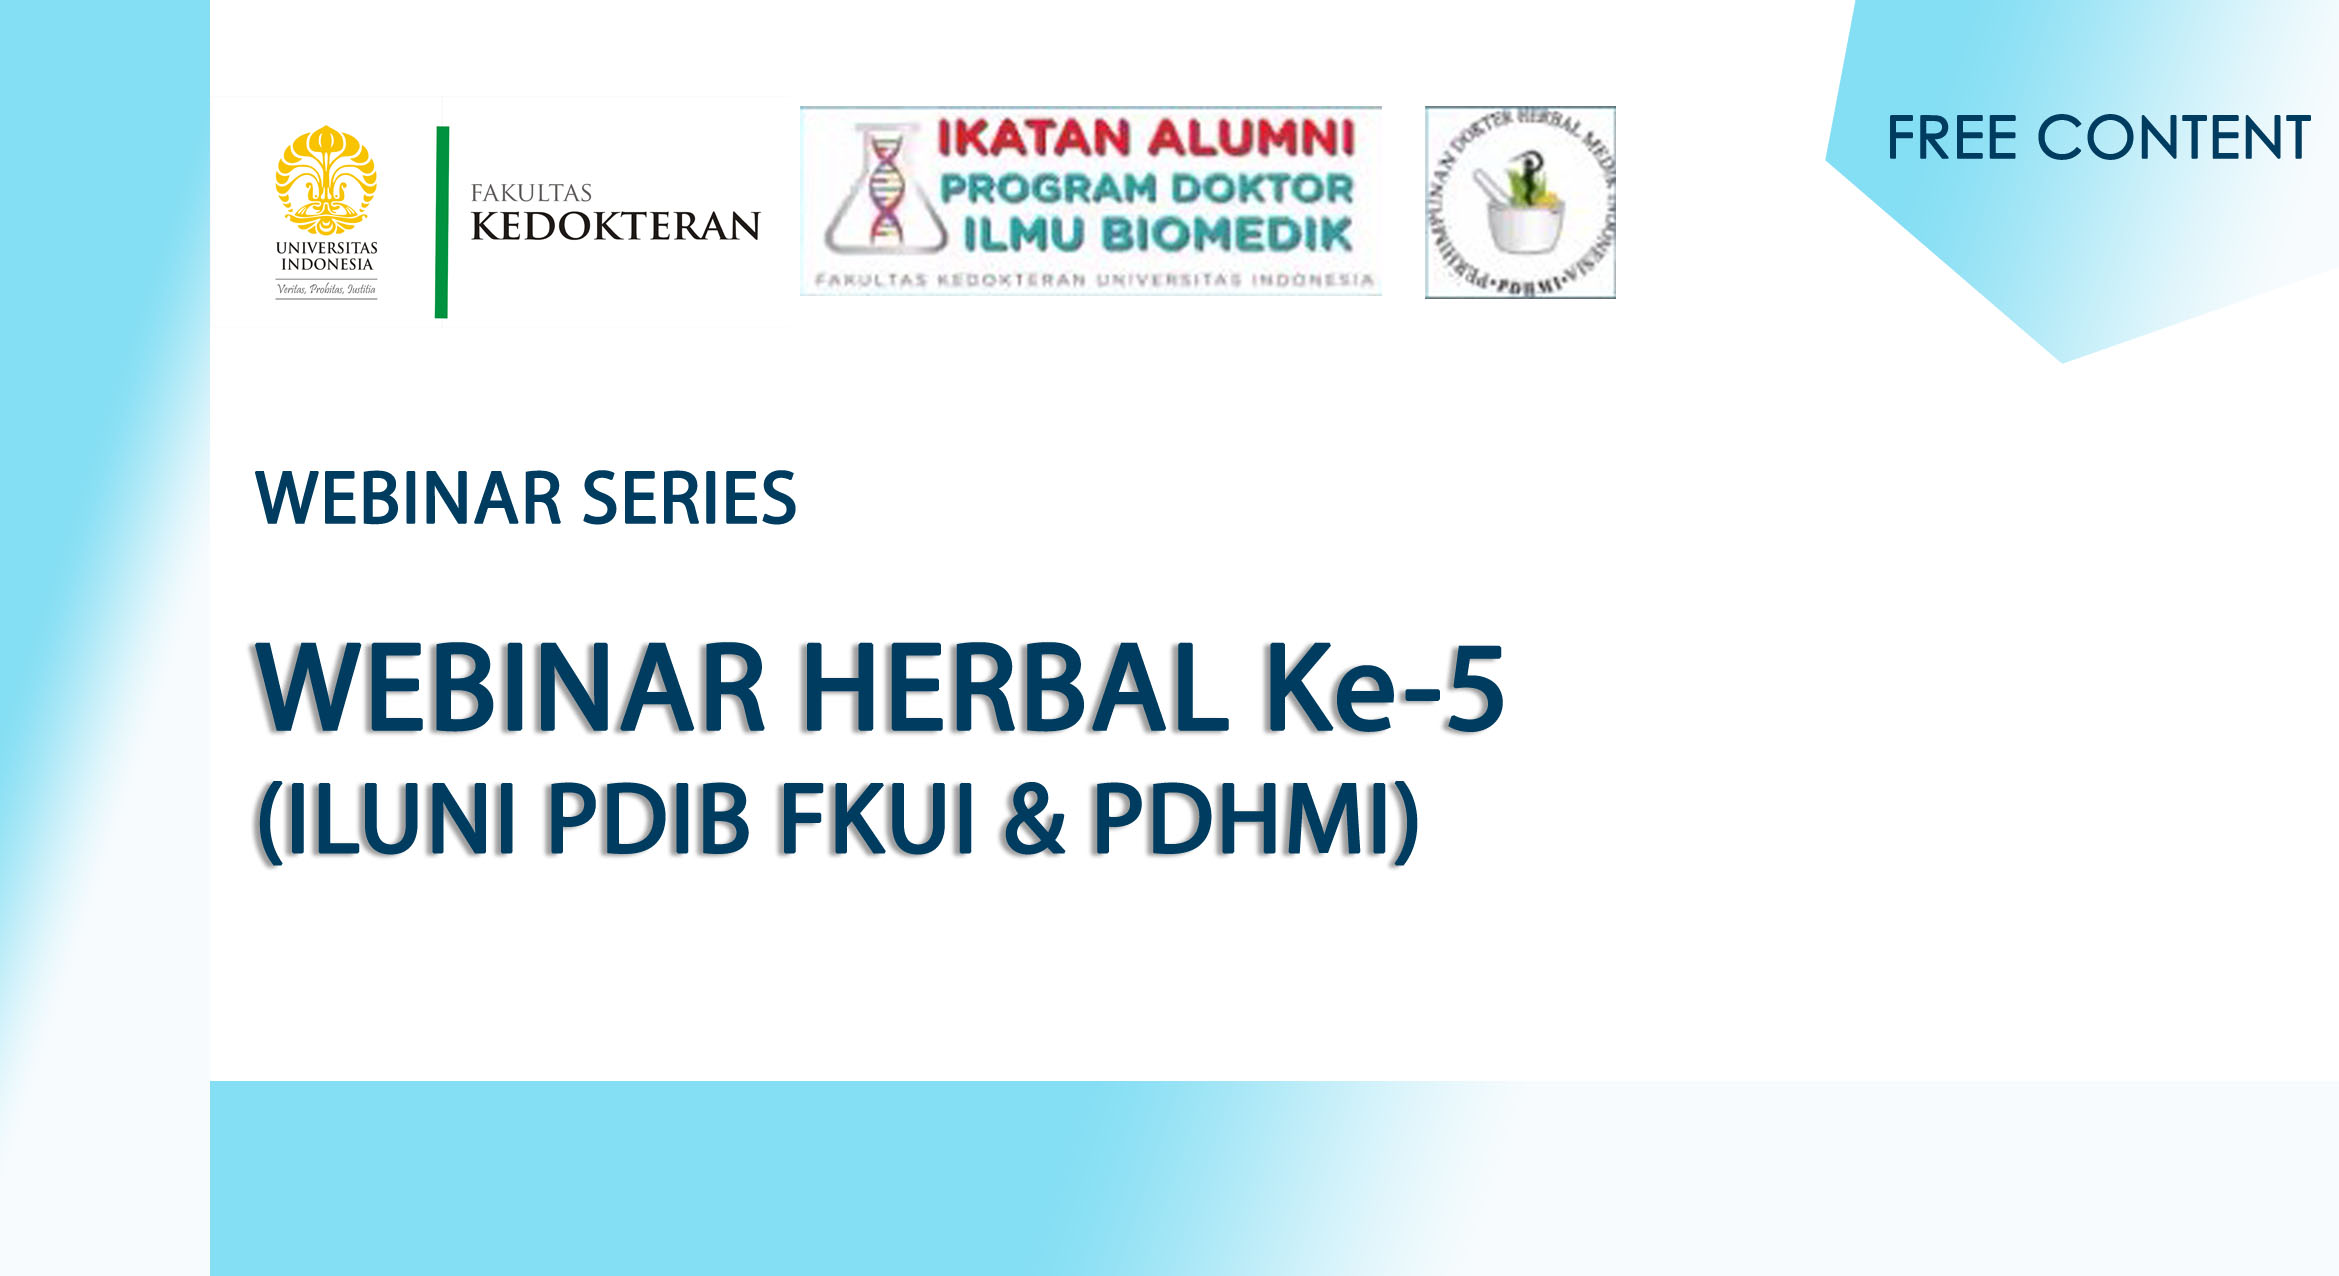 Webinar Herbal Series Ke-5 ILUNI PDIB & PDHMI Special Update COVID-19